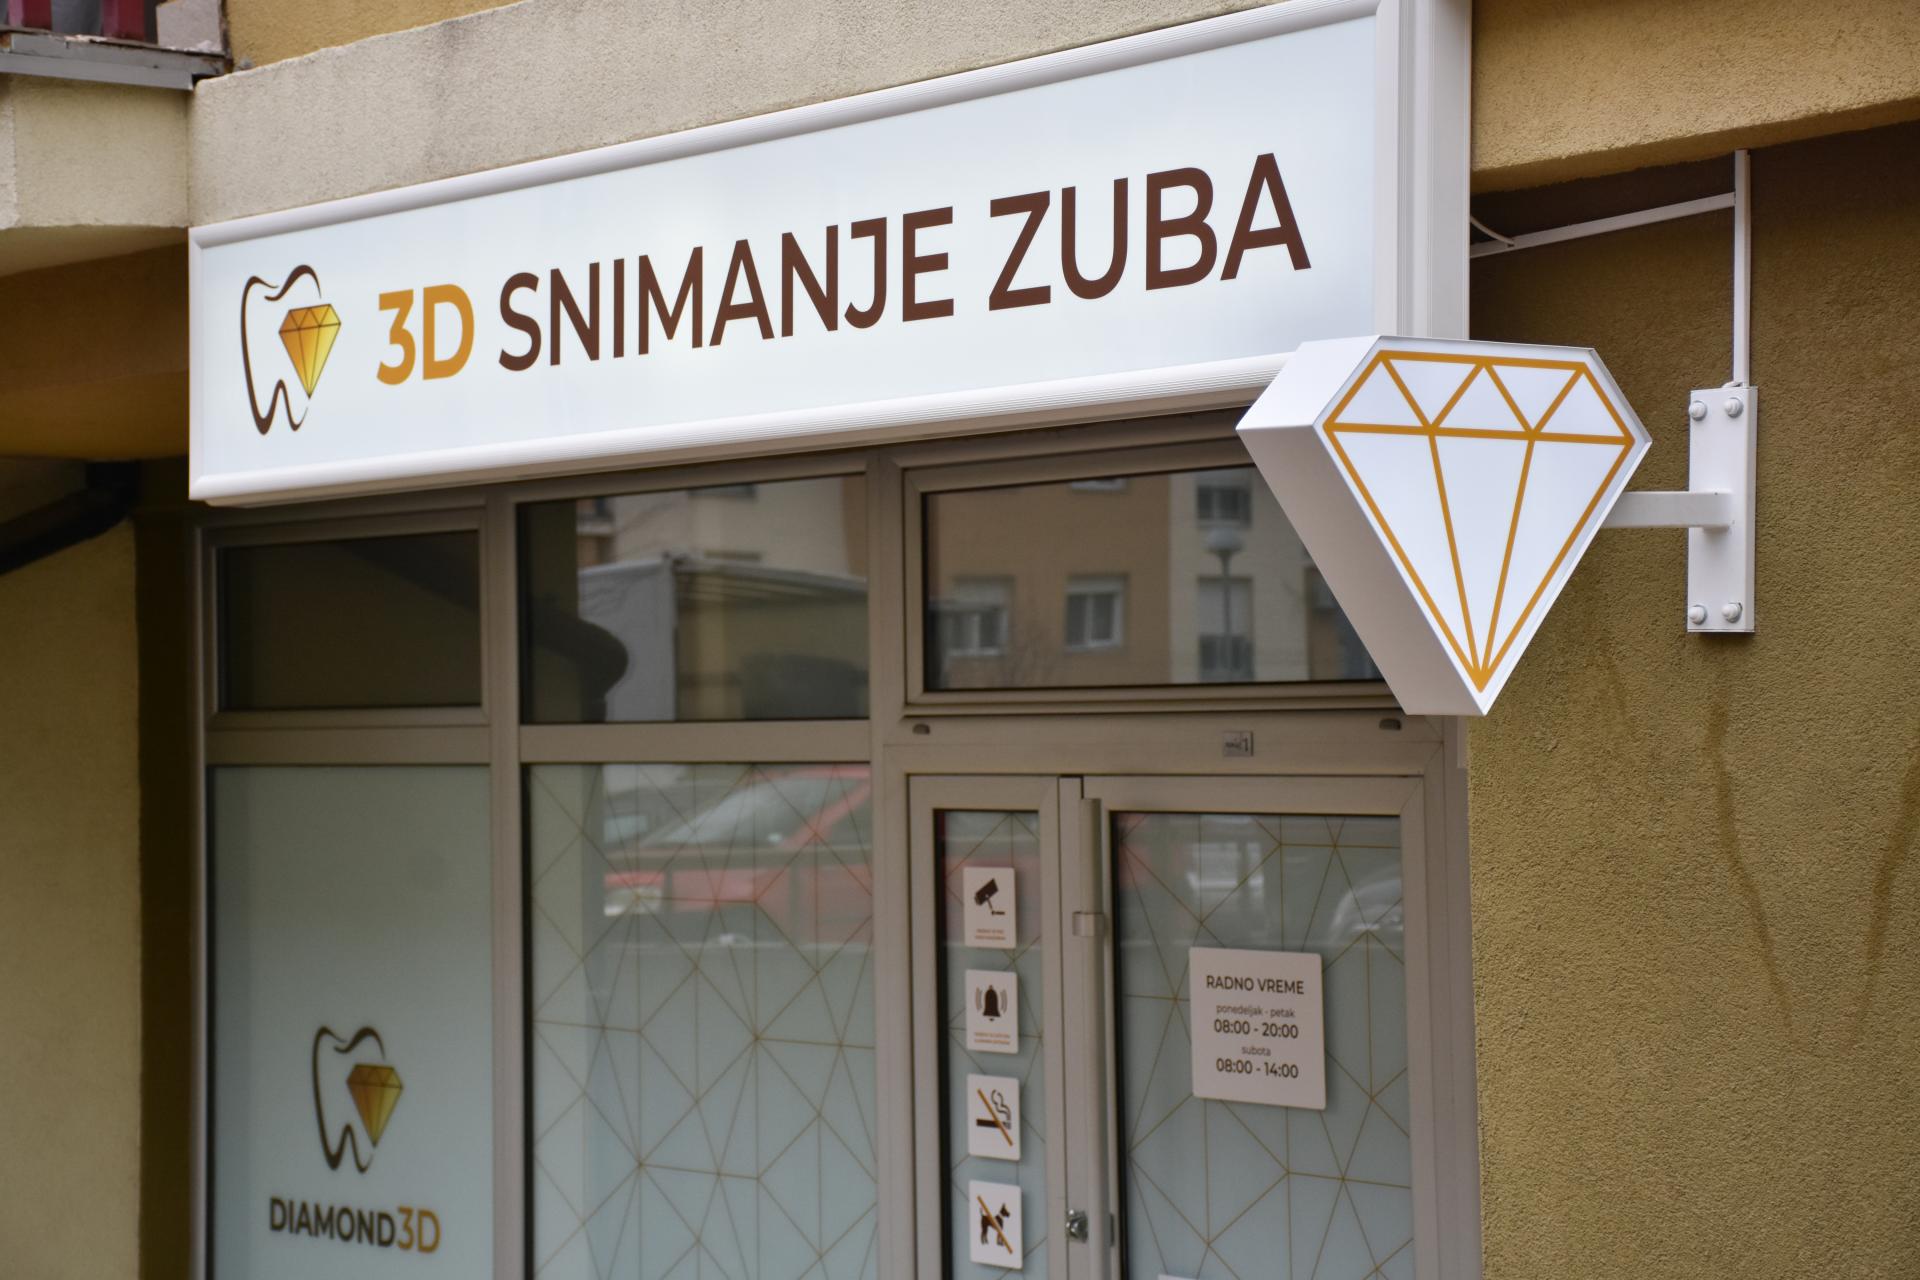 DSC_0849.JPG - Snimanje zuba Diamond 3D Voždovac Beograd